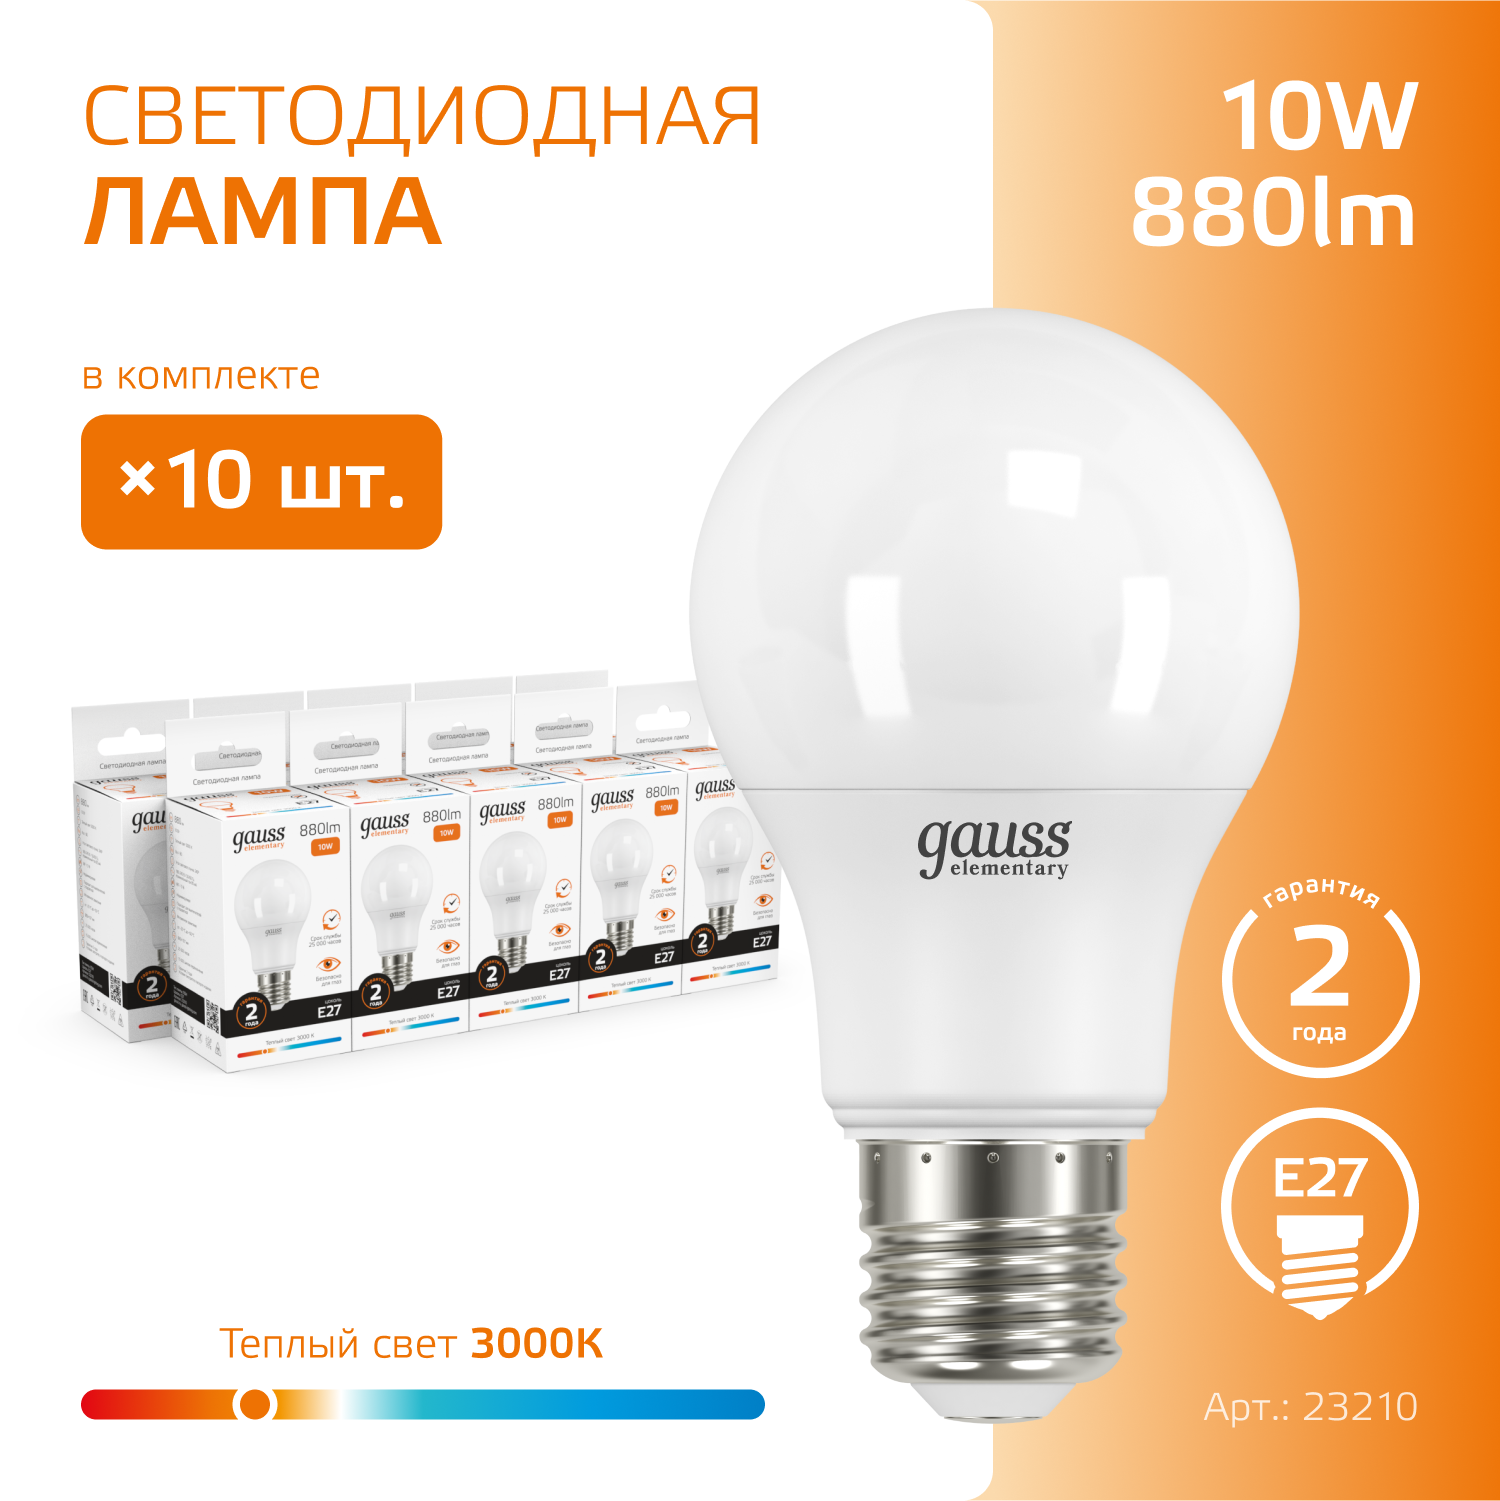 Лампочка светодиодная E27 Груша 10W теплый свет 3000K упаковка 10 шт. Gauss Elementary